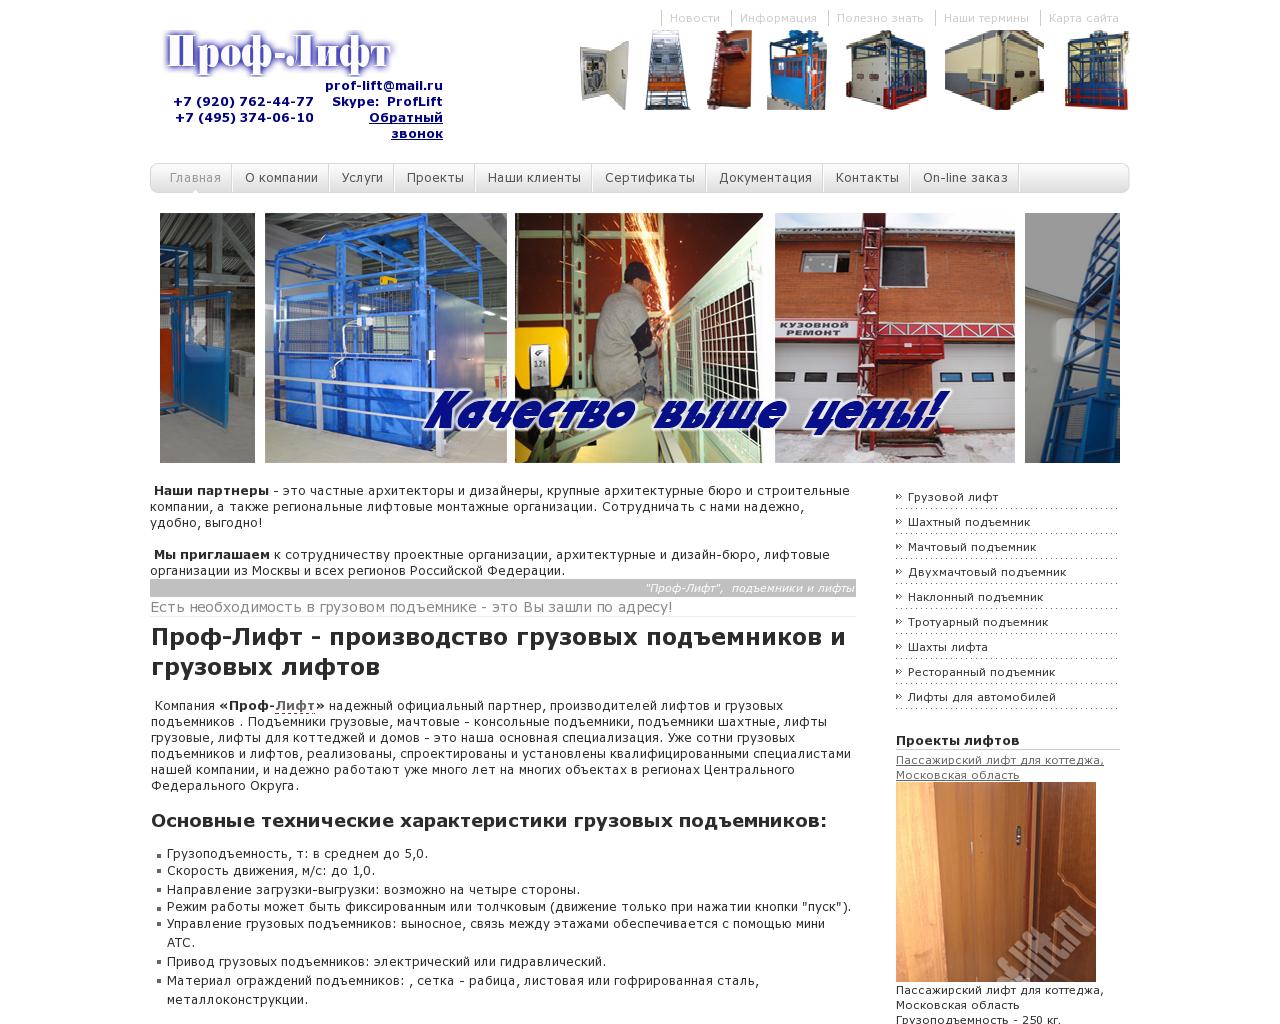 Изображение сайта prof-lift.ru в разрешении 1280x1024